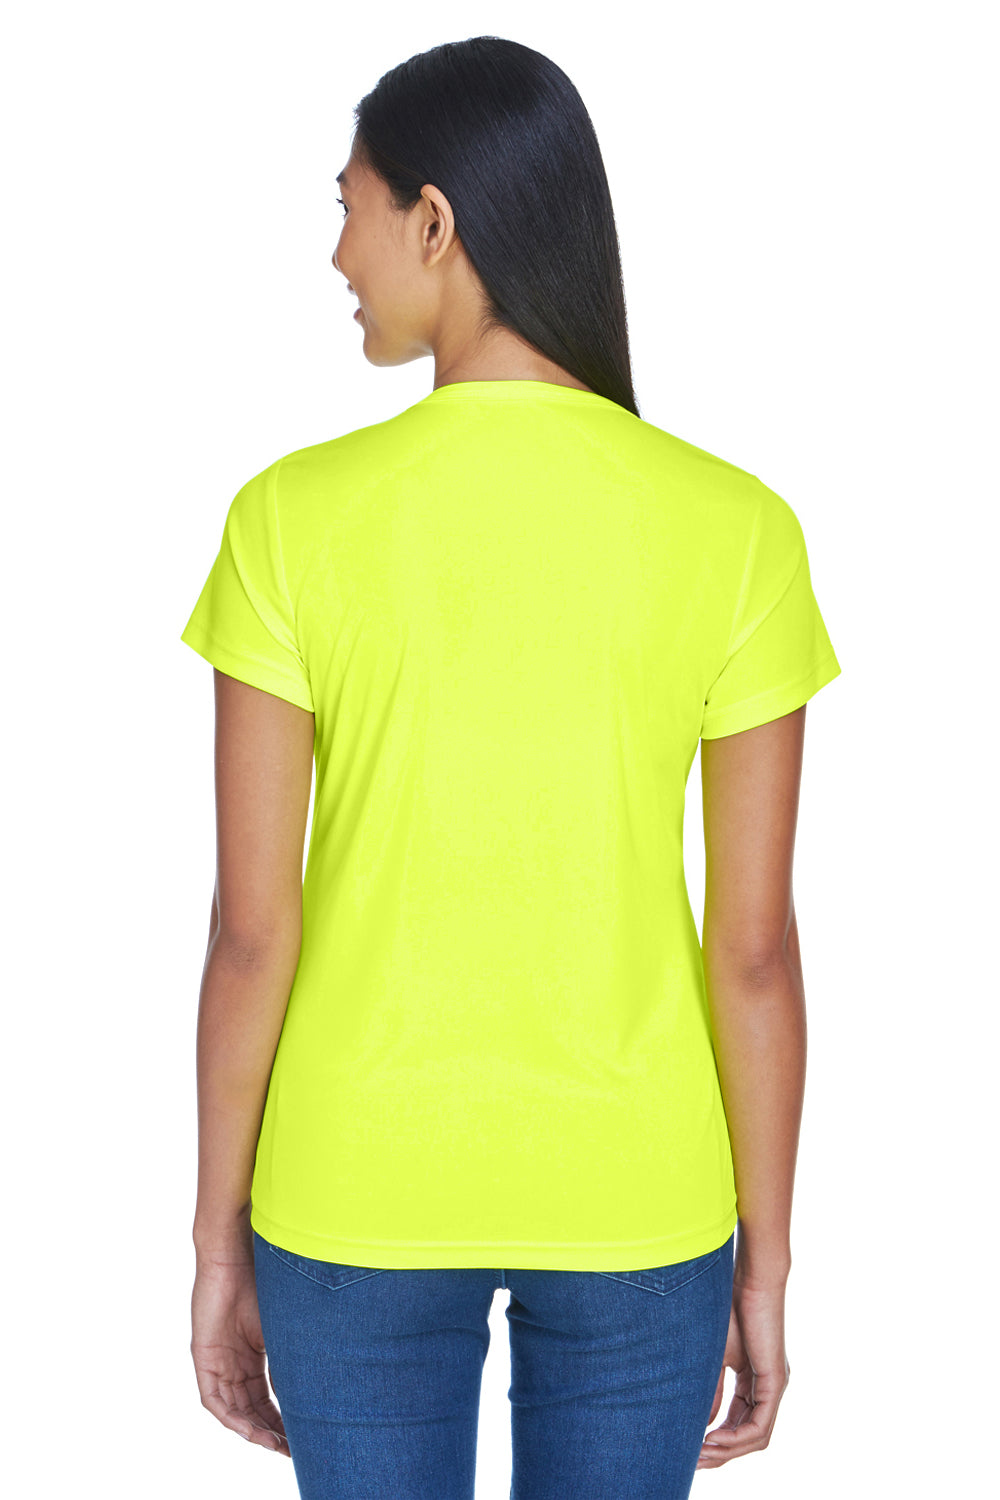 UltraClub 8420L Womens Cool & Dry Performance Moisture Wicking Short Sleeve Crewneck T-Shirt Bright Yellow Back